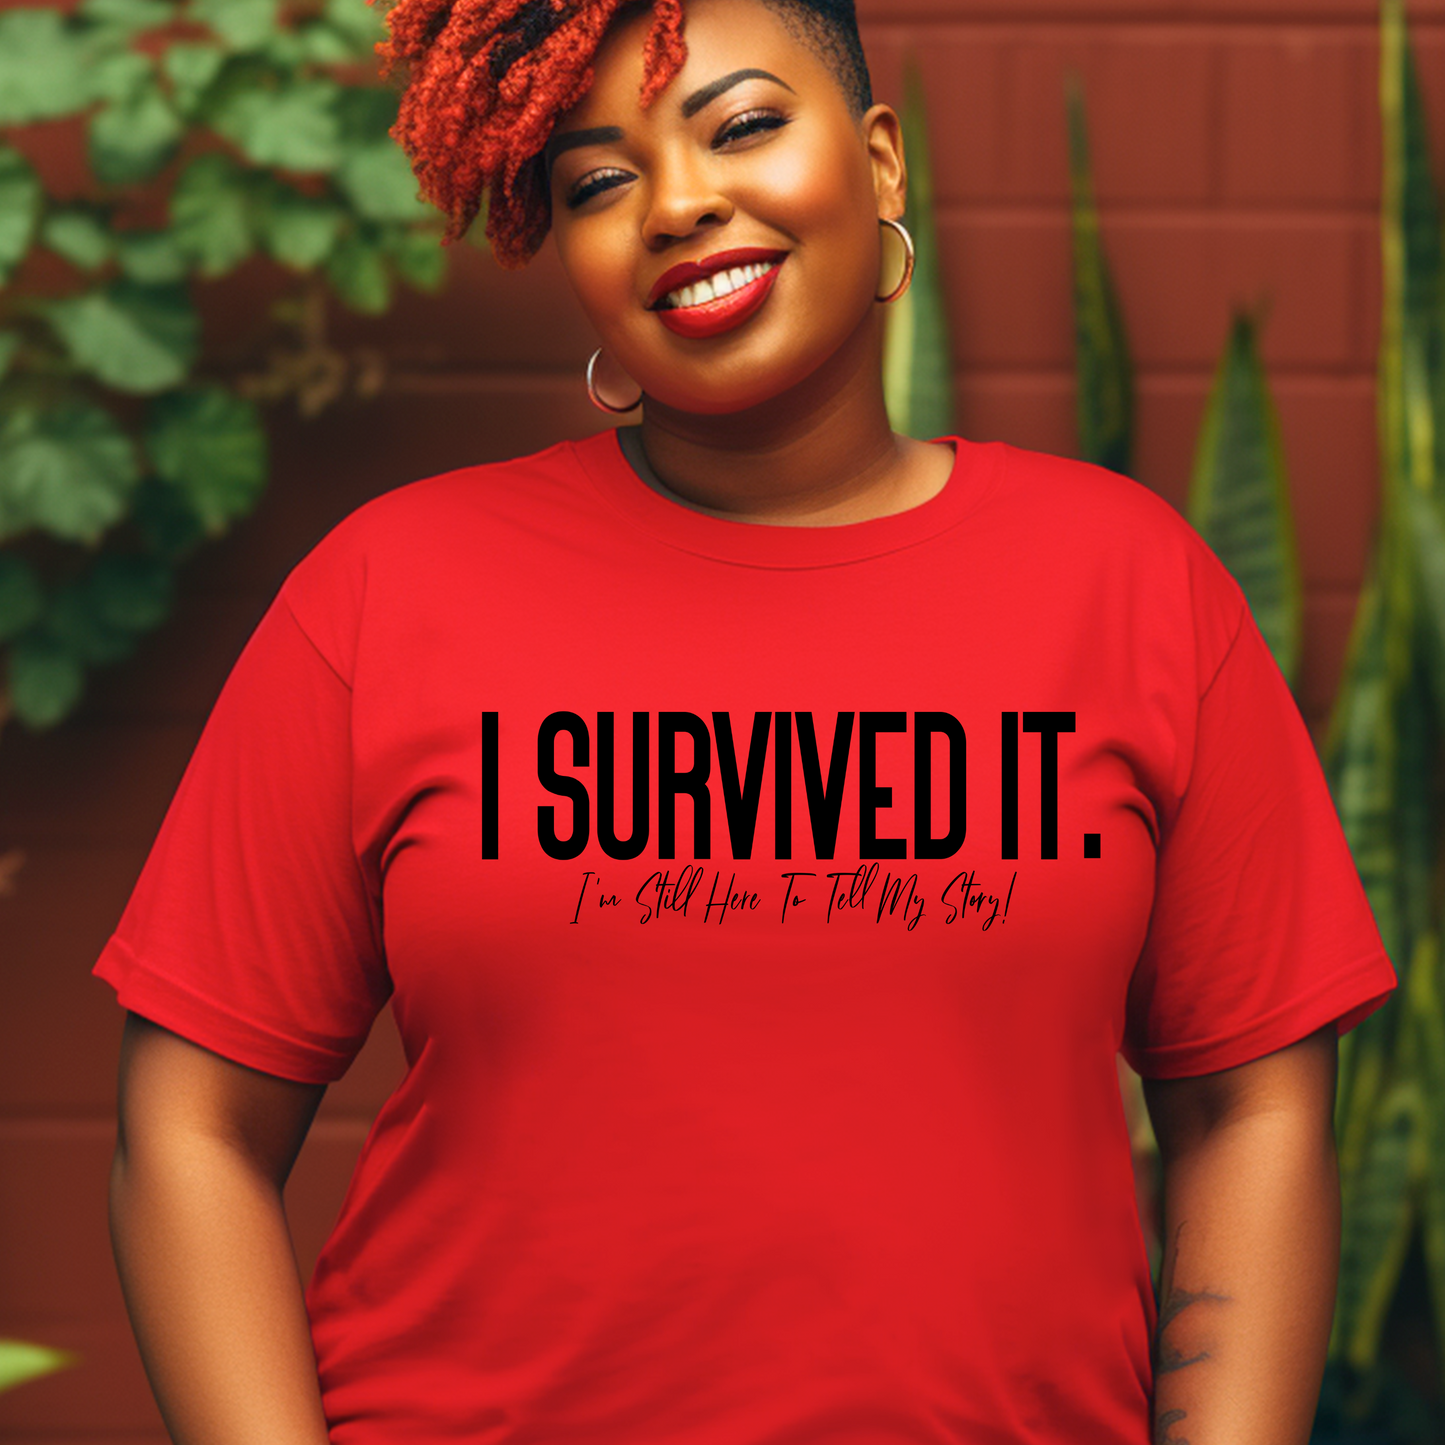 I Survived It Statement T-shirt